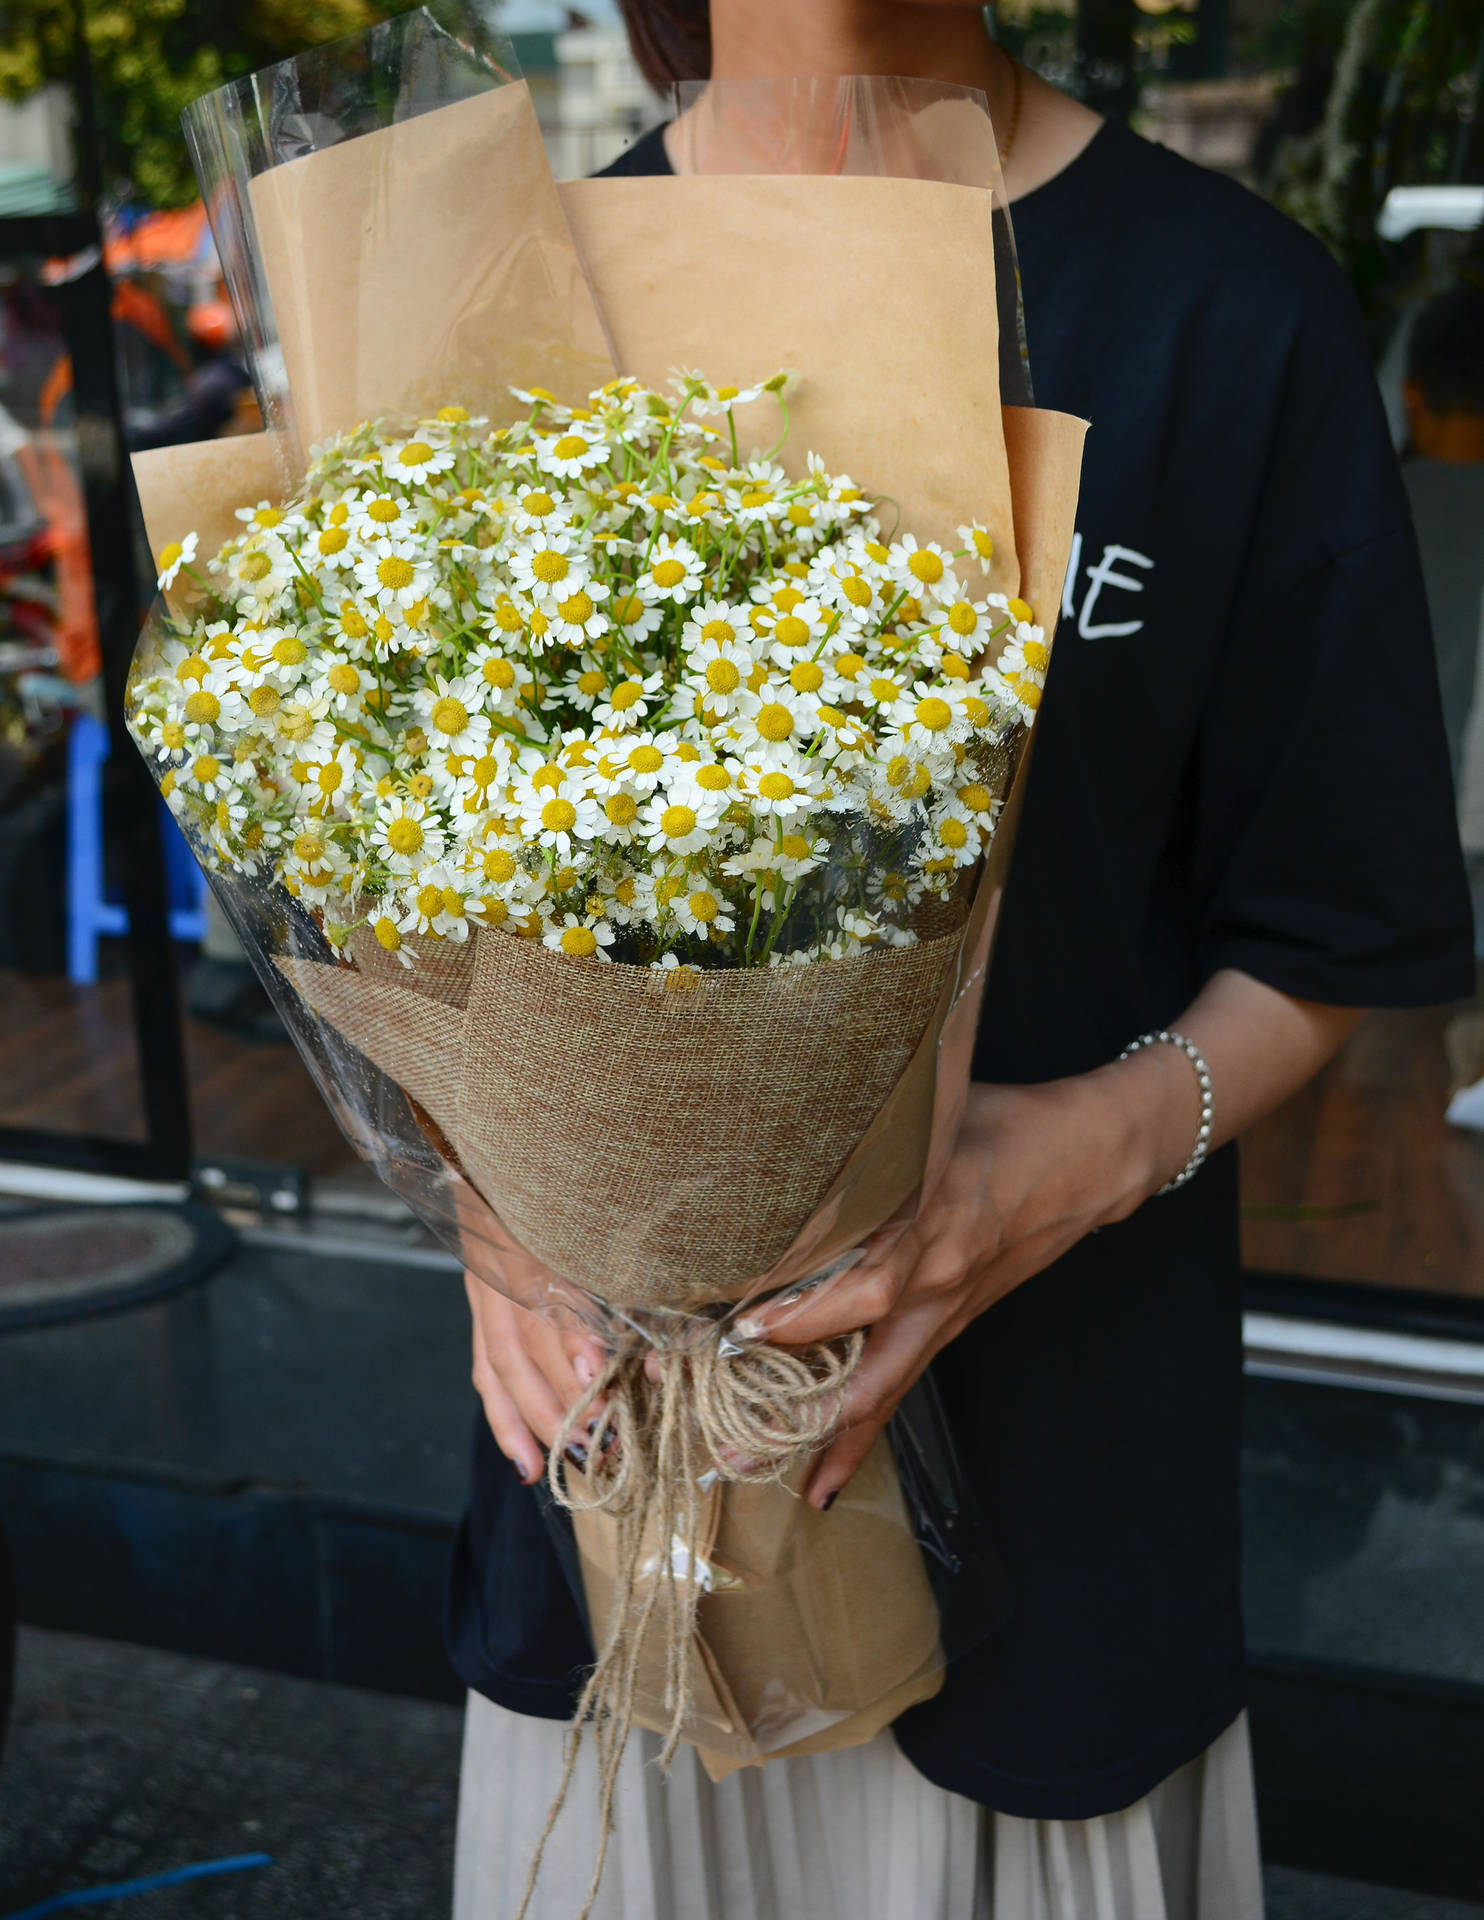 Ramofresco De Flores De Feverfew En La Tienda De Flores Fondo de pantalla